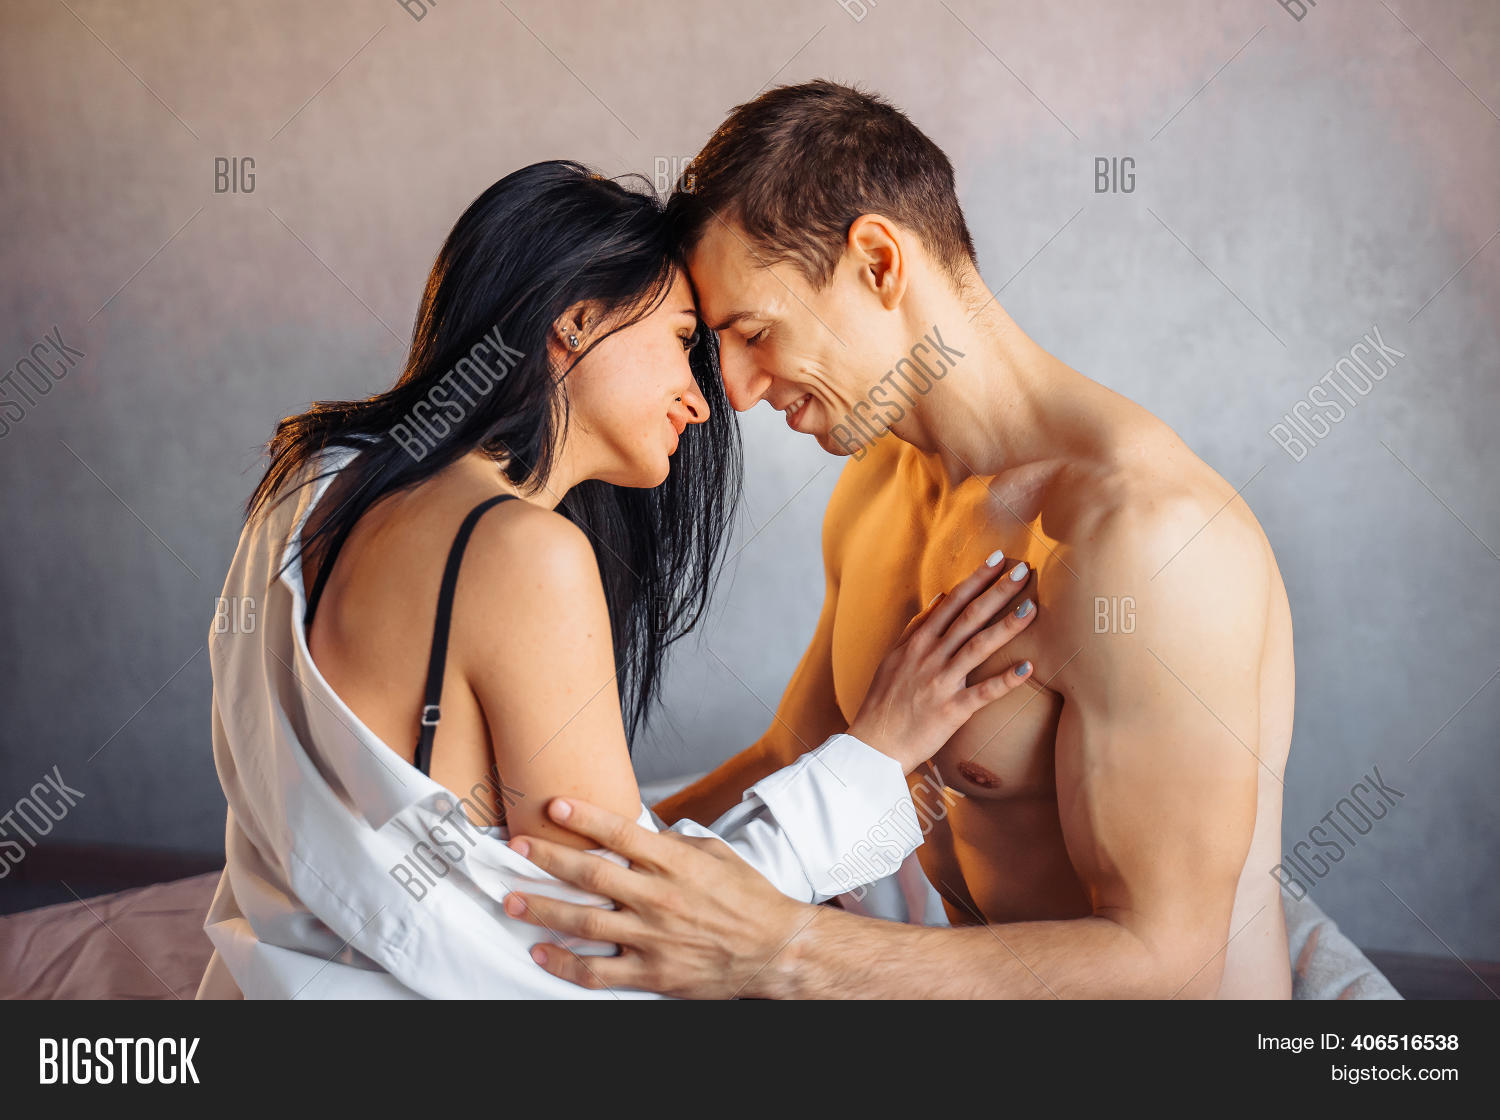 adrian rivodeaux recommends Gorgeous Nude Couples